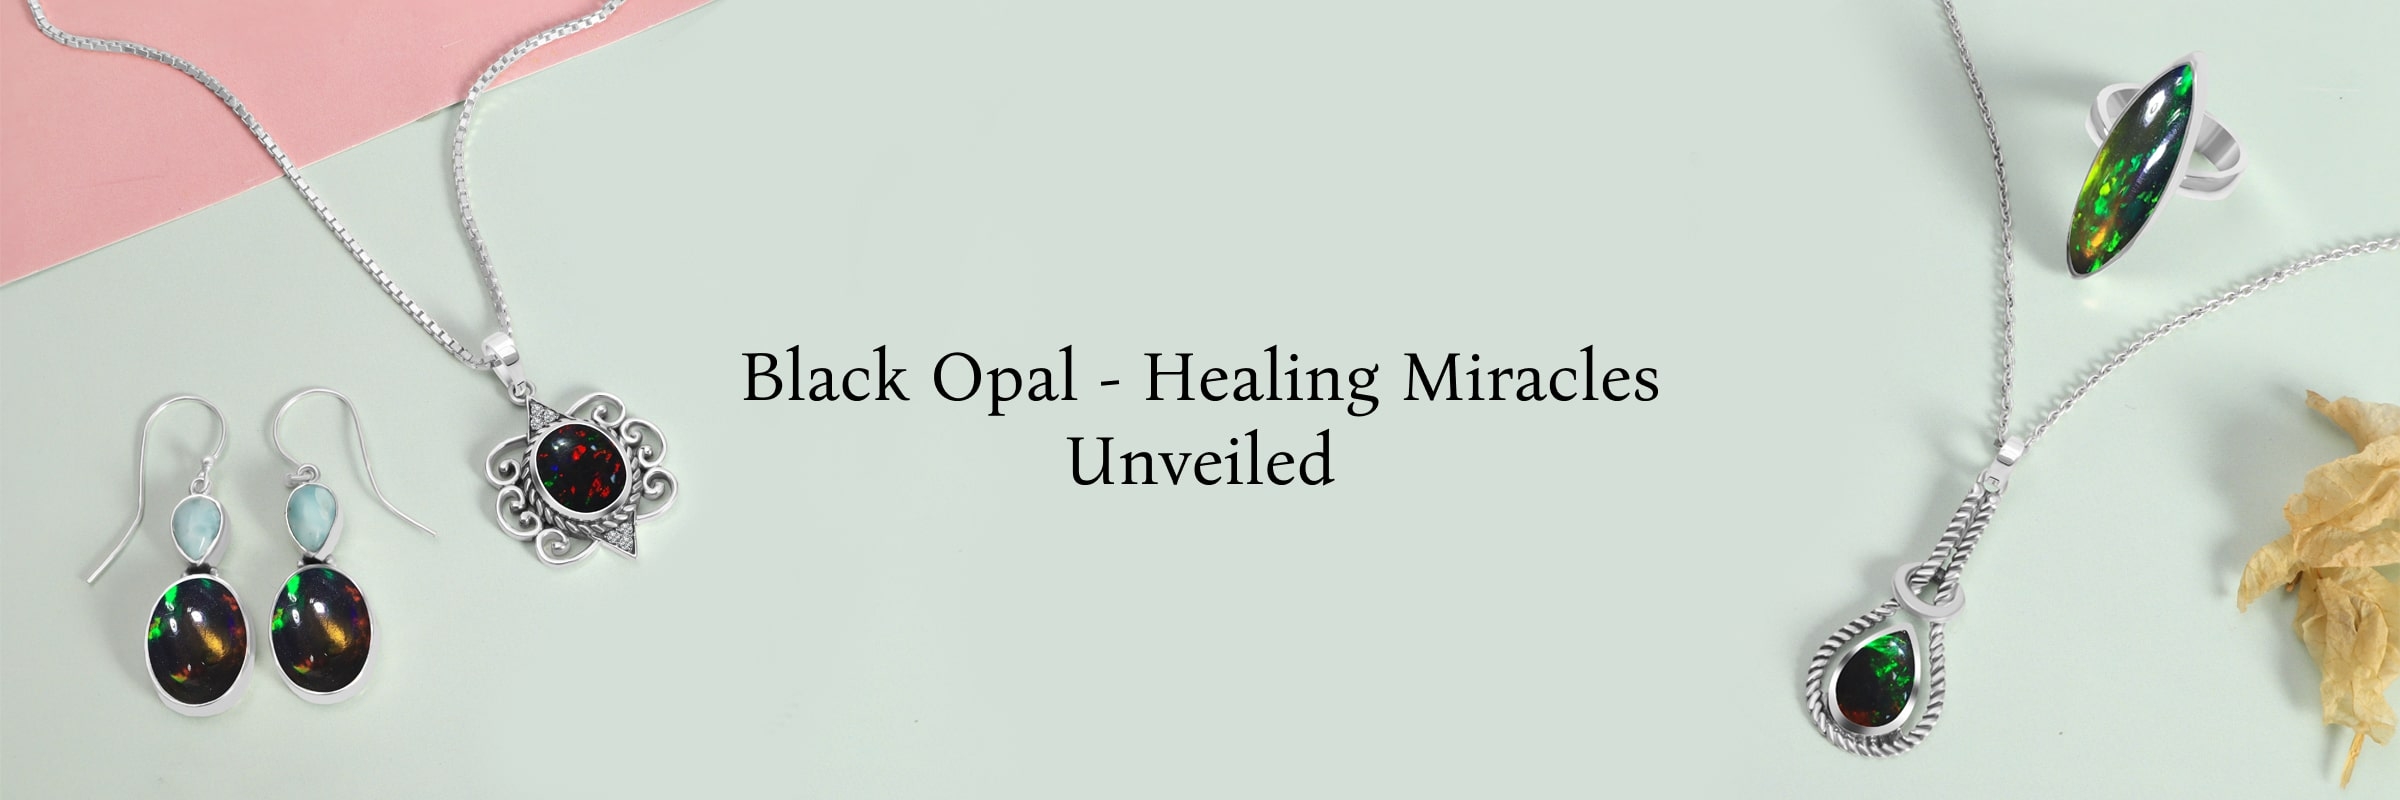 Black Opal Healing Properties & Benefits